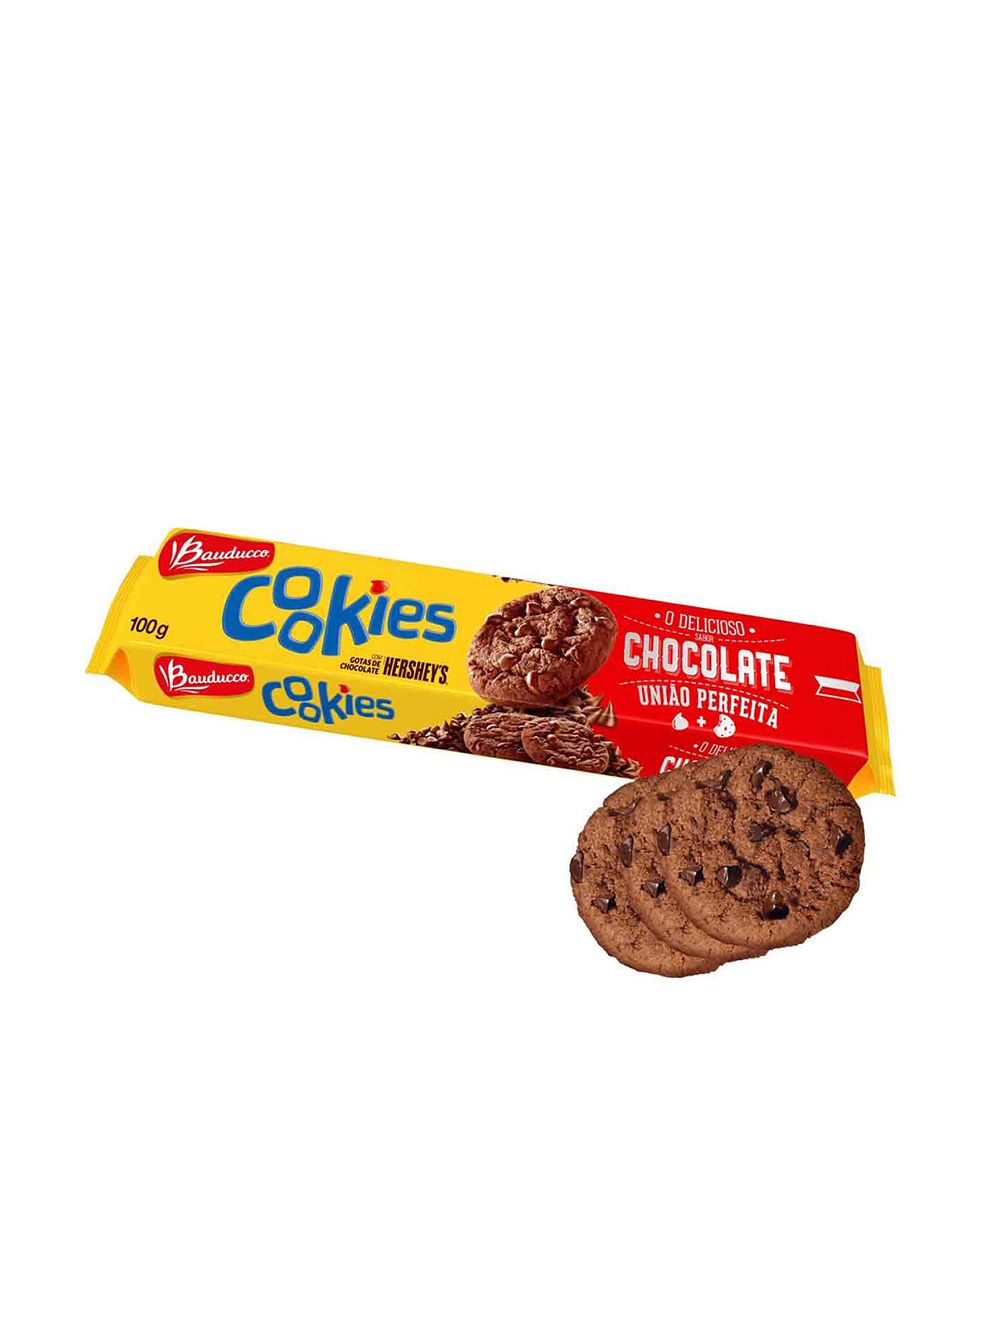 Biscoito Bauducco Cookies Chocolate de 100g